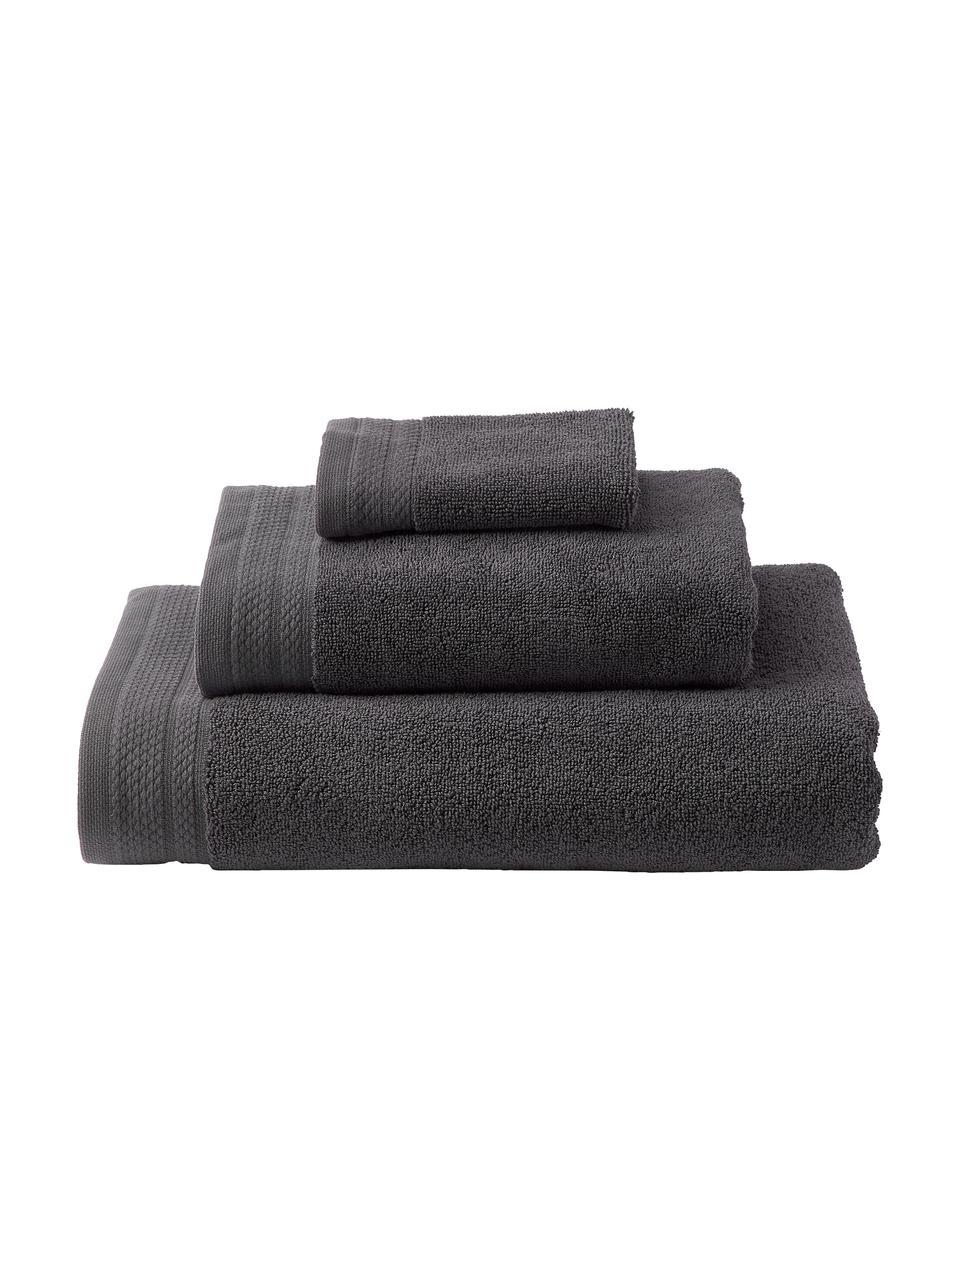 Set 3 asciugamani in cotone organico Premium, 100% cotone organico certificato GOTS (da GCL International, GCL-300517).
Qualità pesante, 600 g/m², Antracite, Set in varie misure